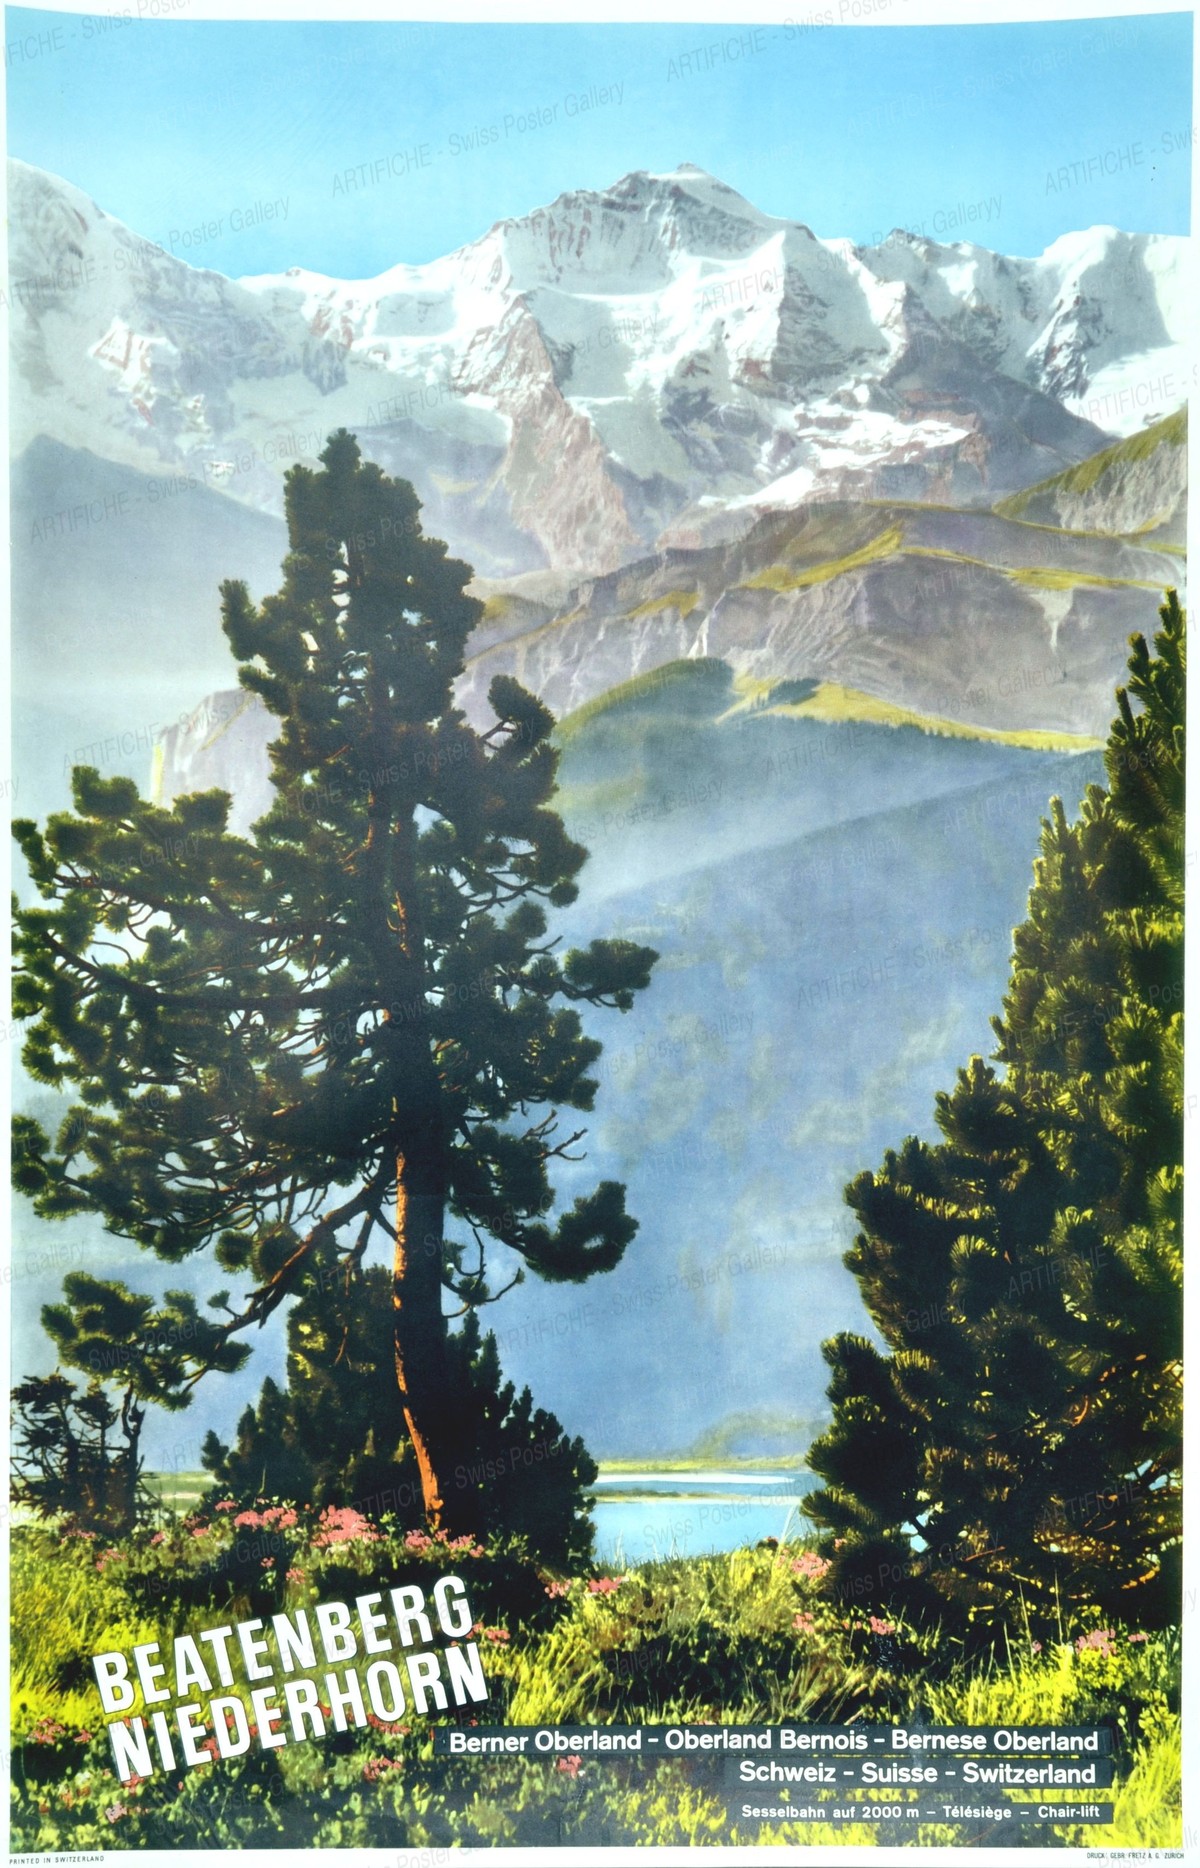 Beatenberg – Bernese Oberland, Artist unknown